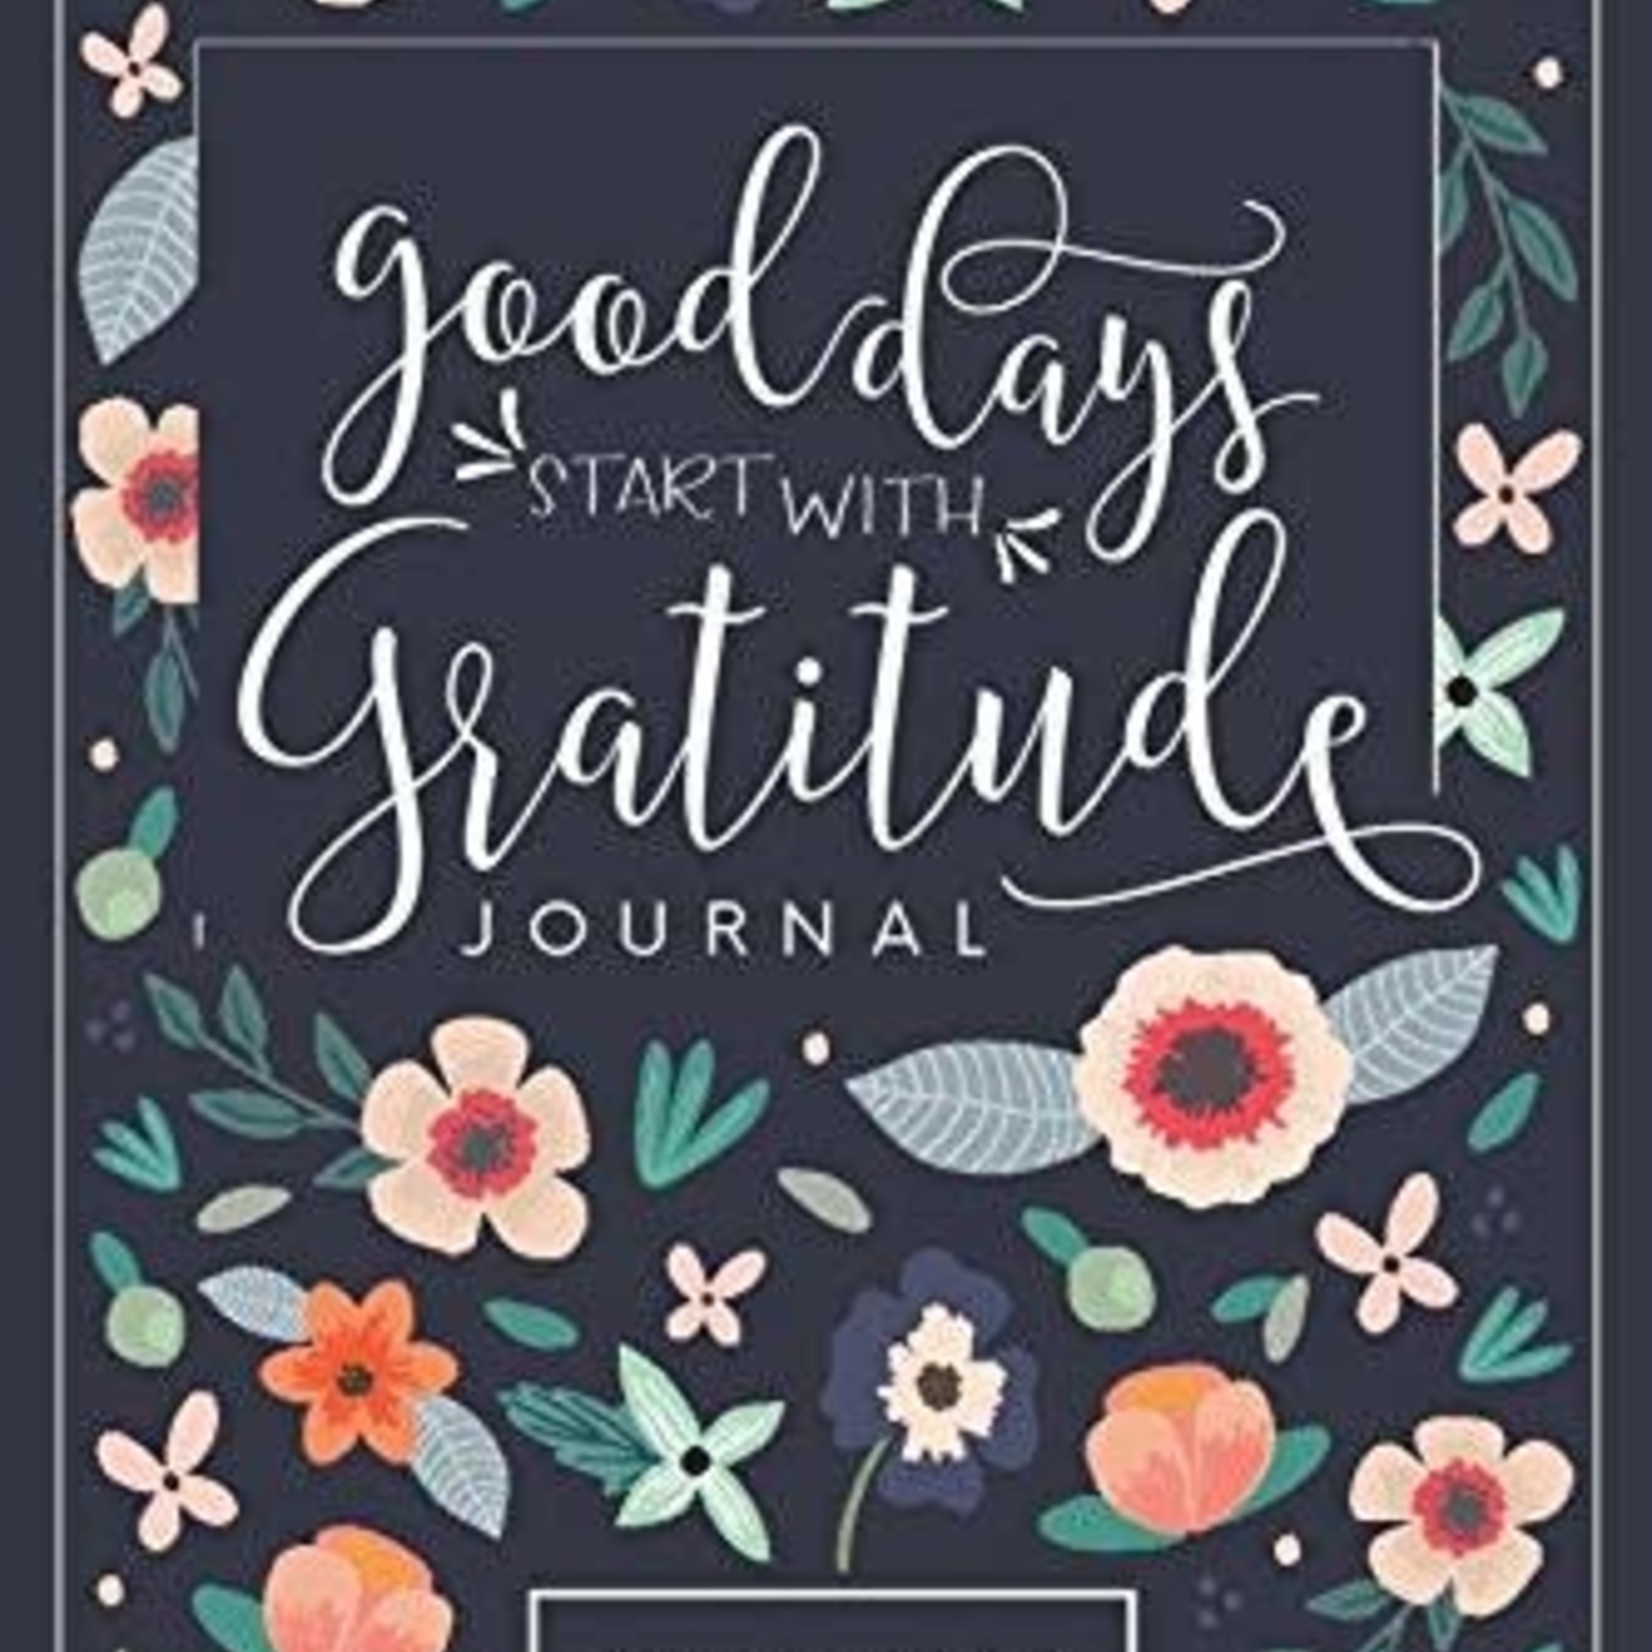 Good Days Star With Gratitude Journal